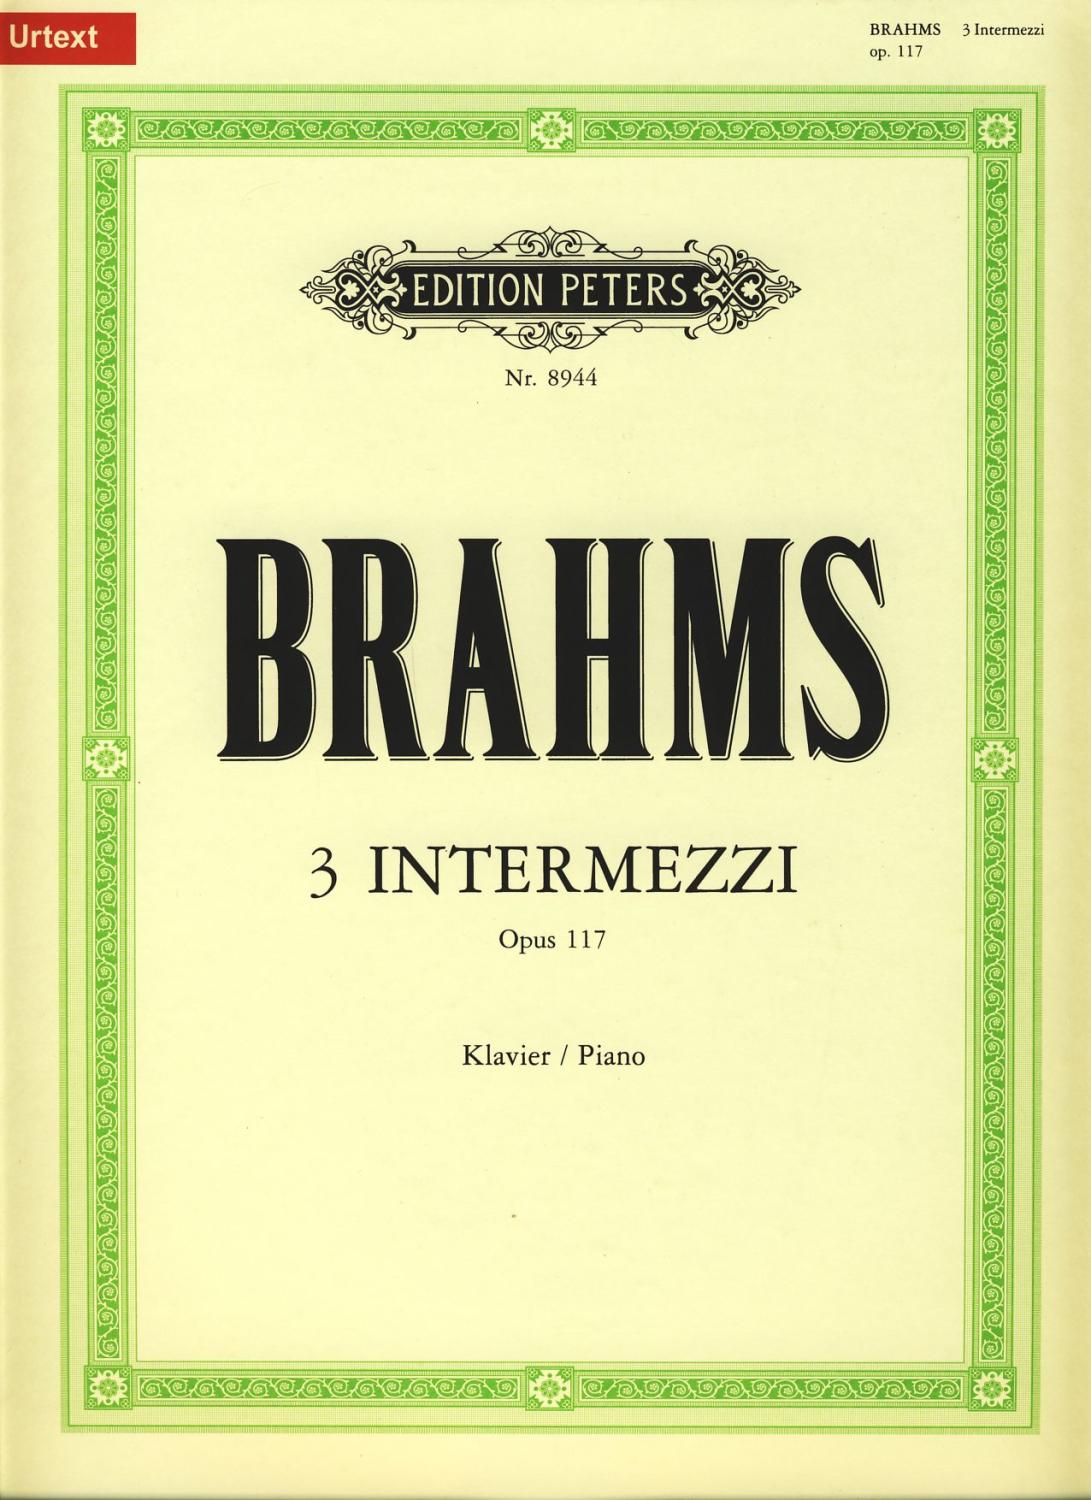 Brahms: Intermezzi, Op. 117